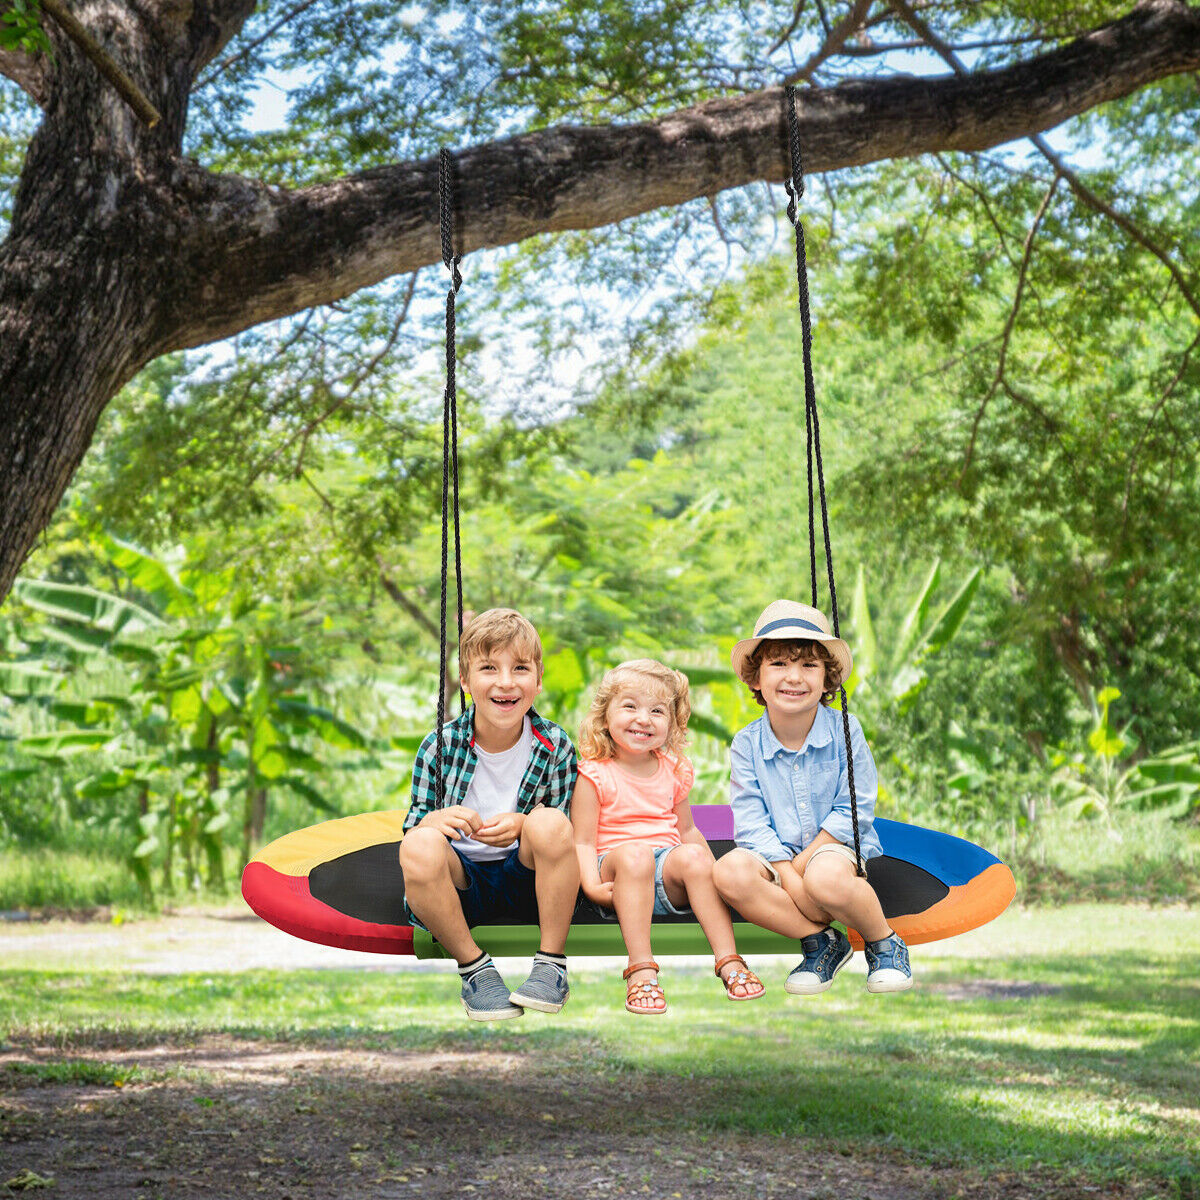 Gymax 60'' Saucer Tree Swing Surf Outdoor Adjustable Kids Giant Oval Platform Swing Set Colorful - image 2 of 10